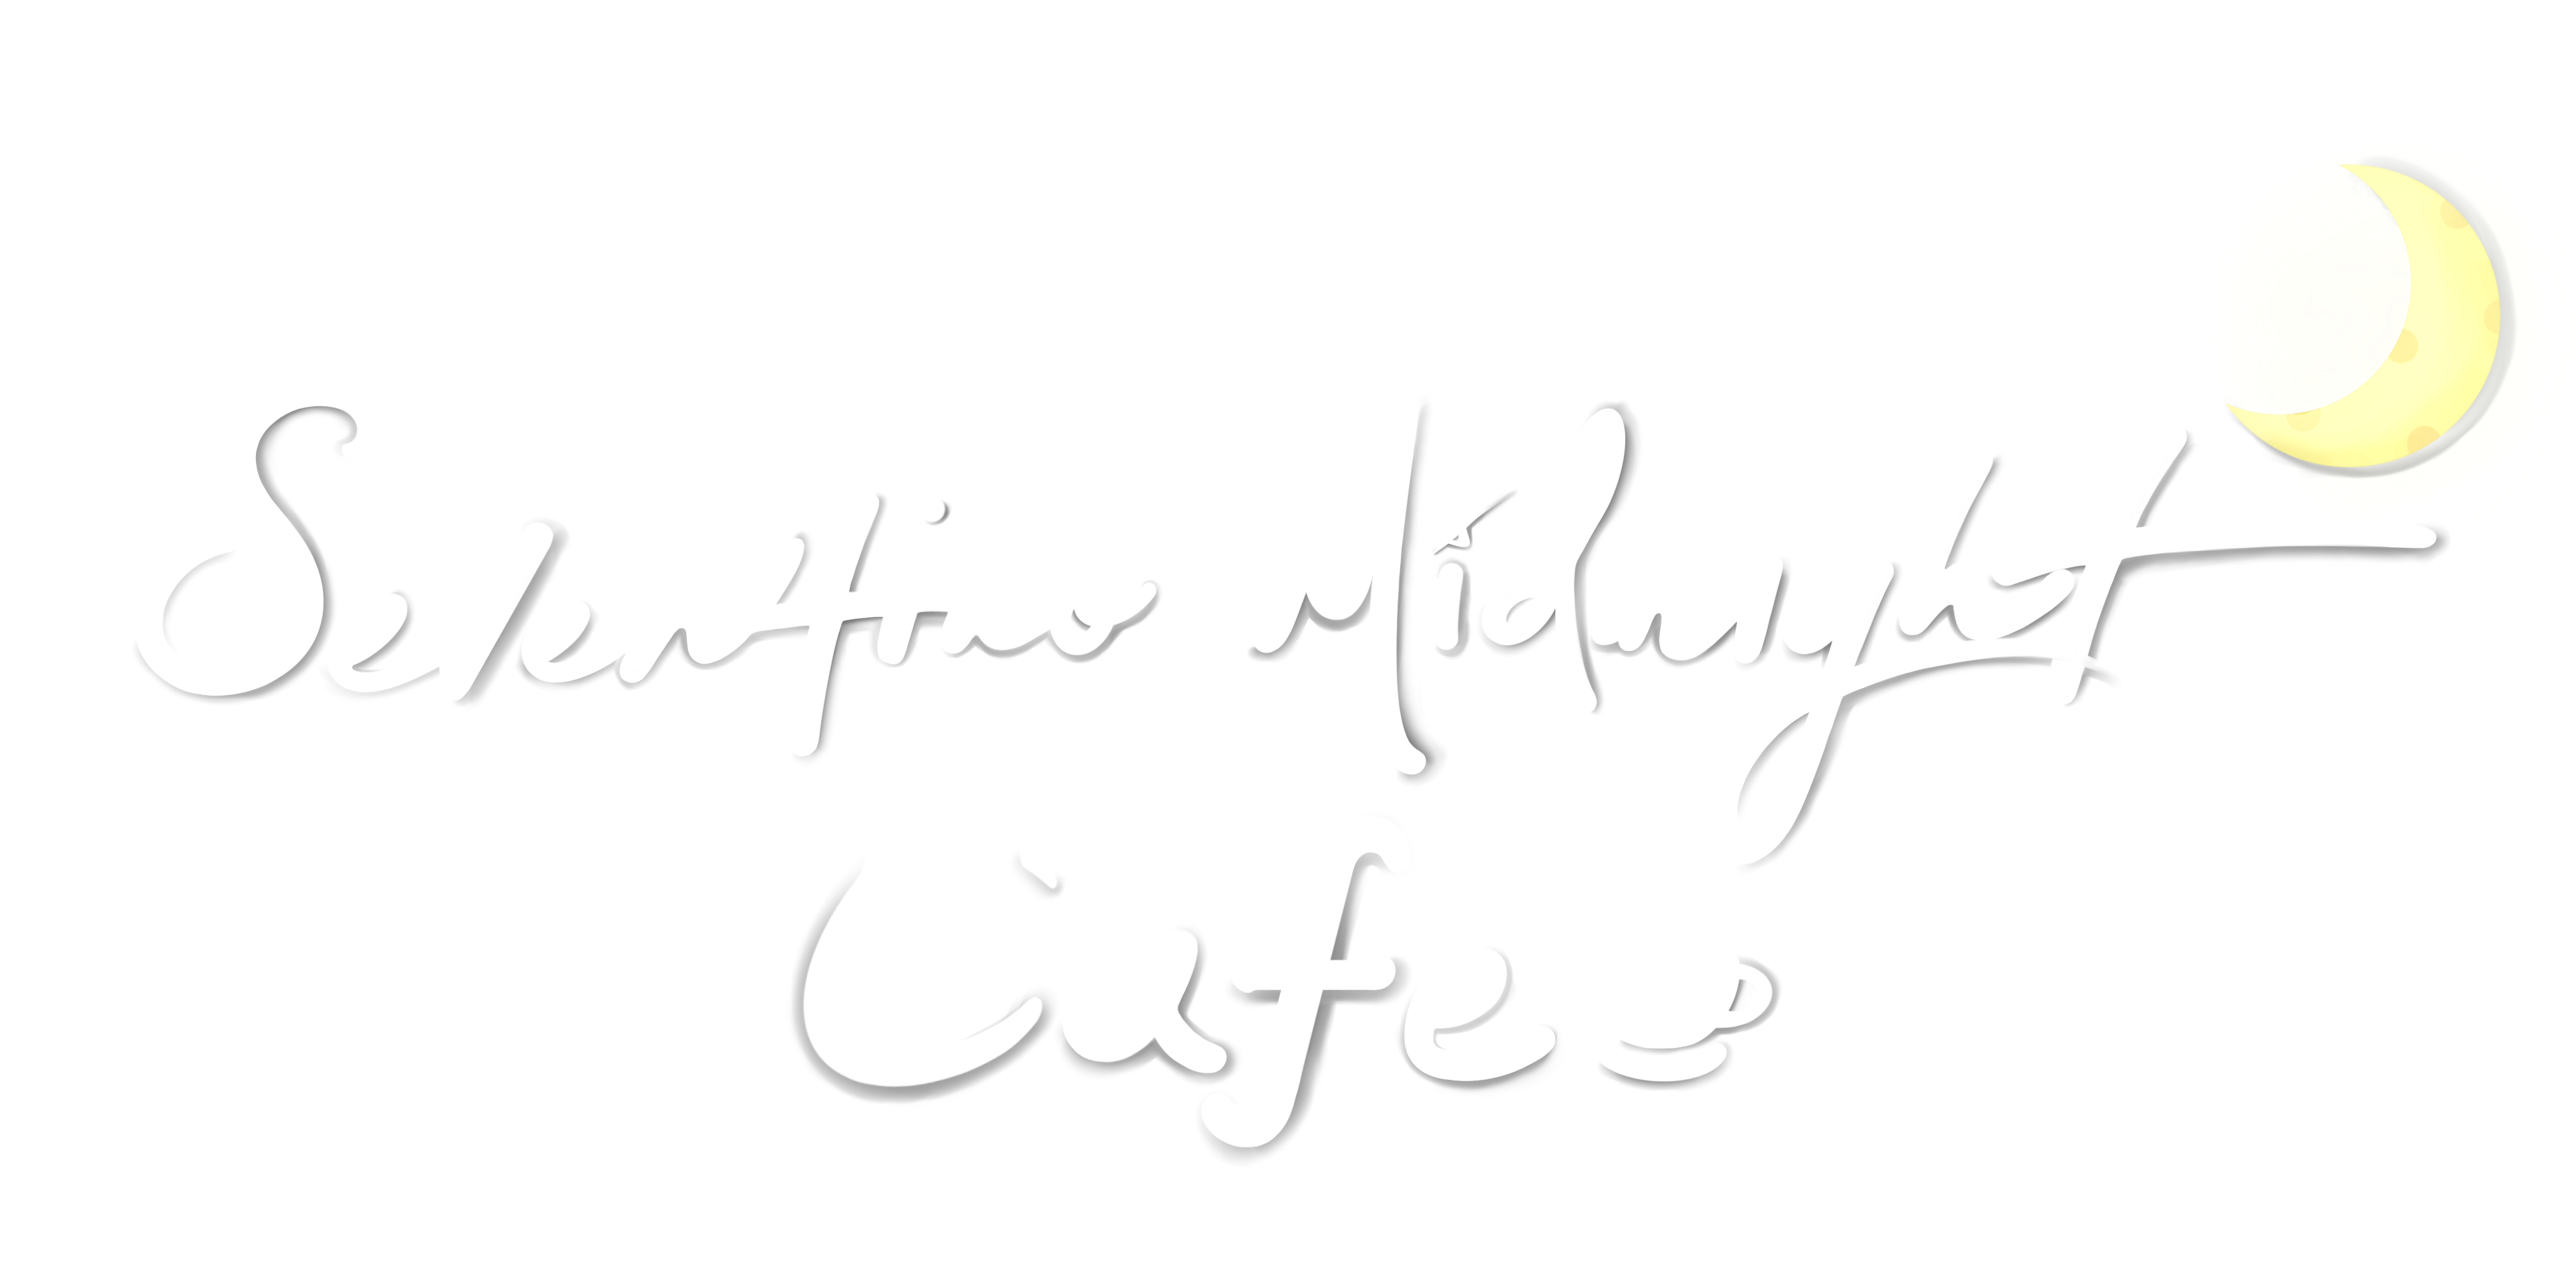 Seventino Midnight Café